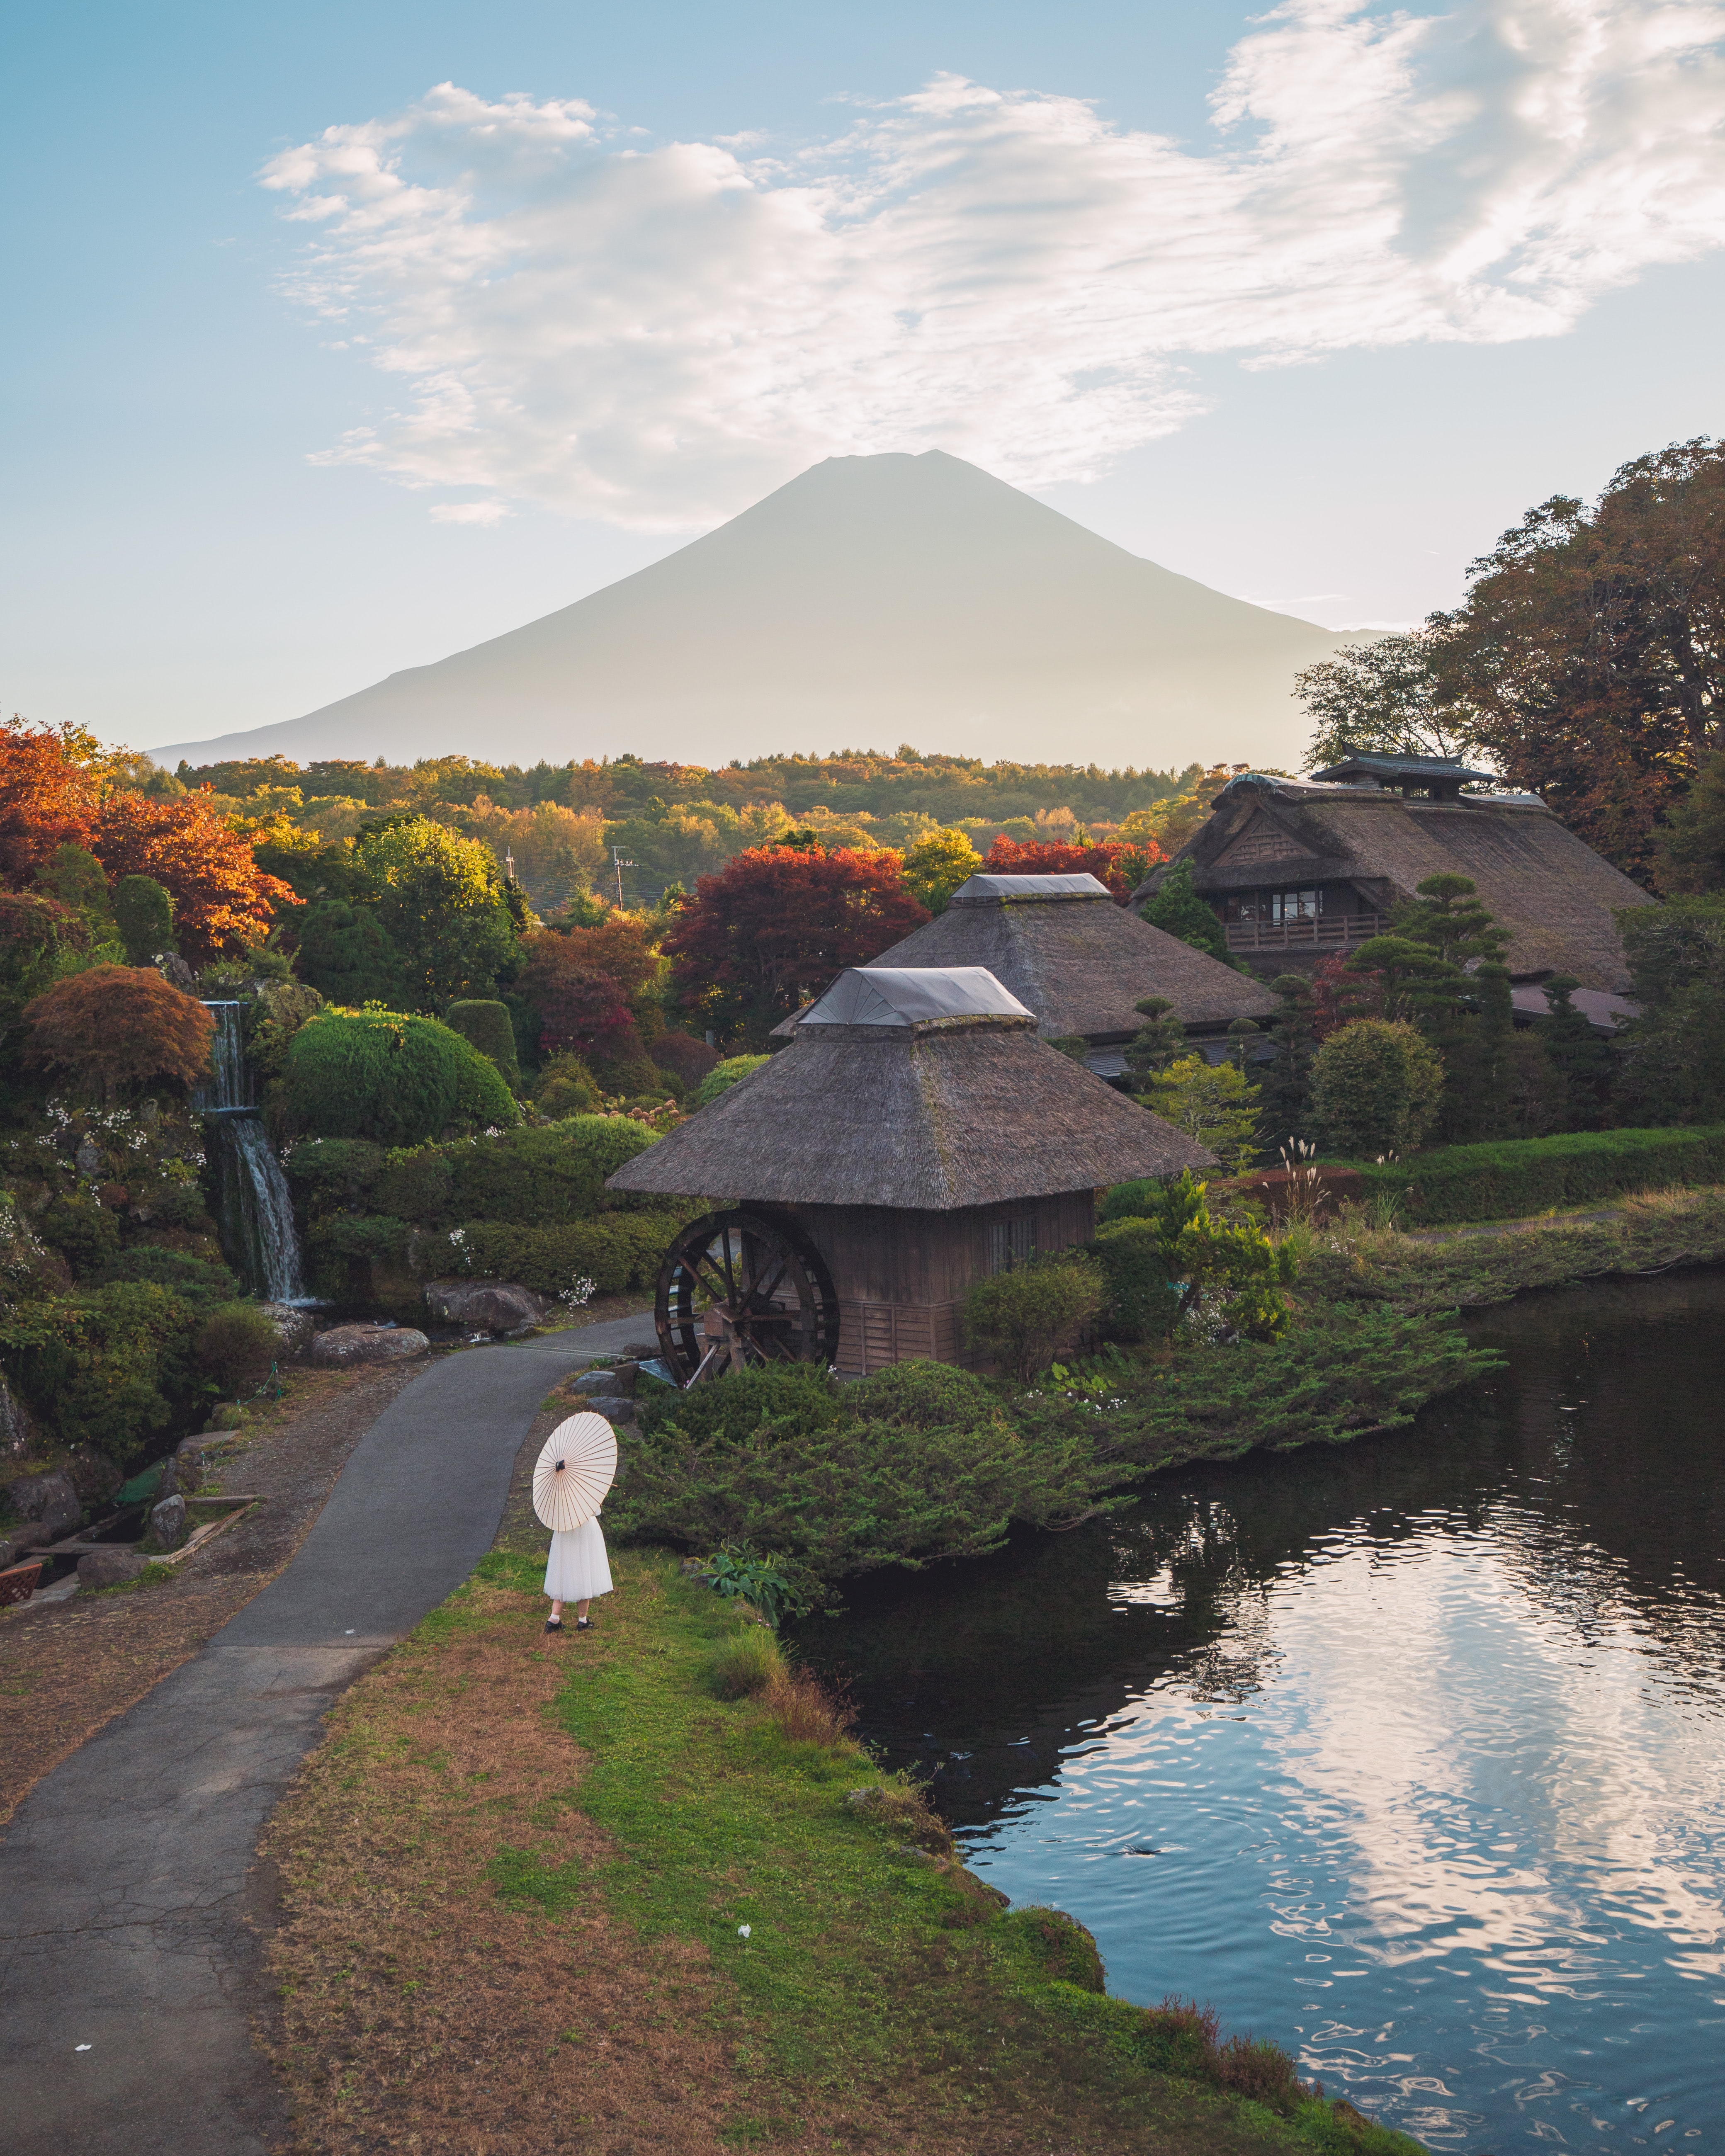 Oshino Hakkai is a part of the 2013-designated Mt. Fuji UNESCO World Cultural Heritage site.(Unsplash)